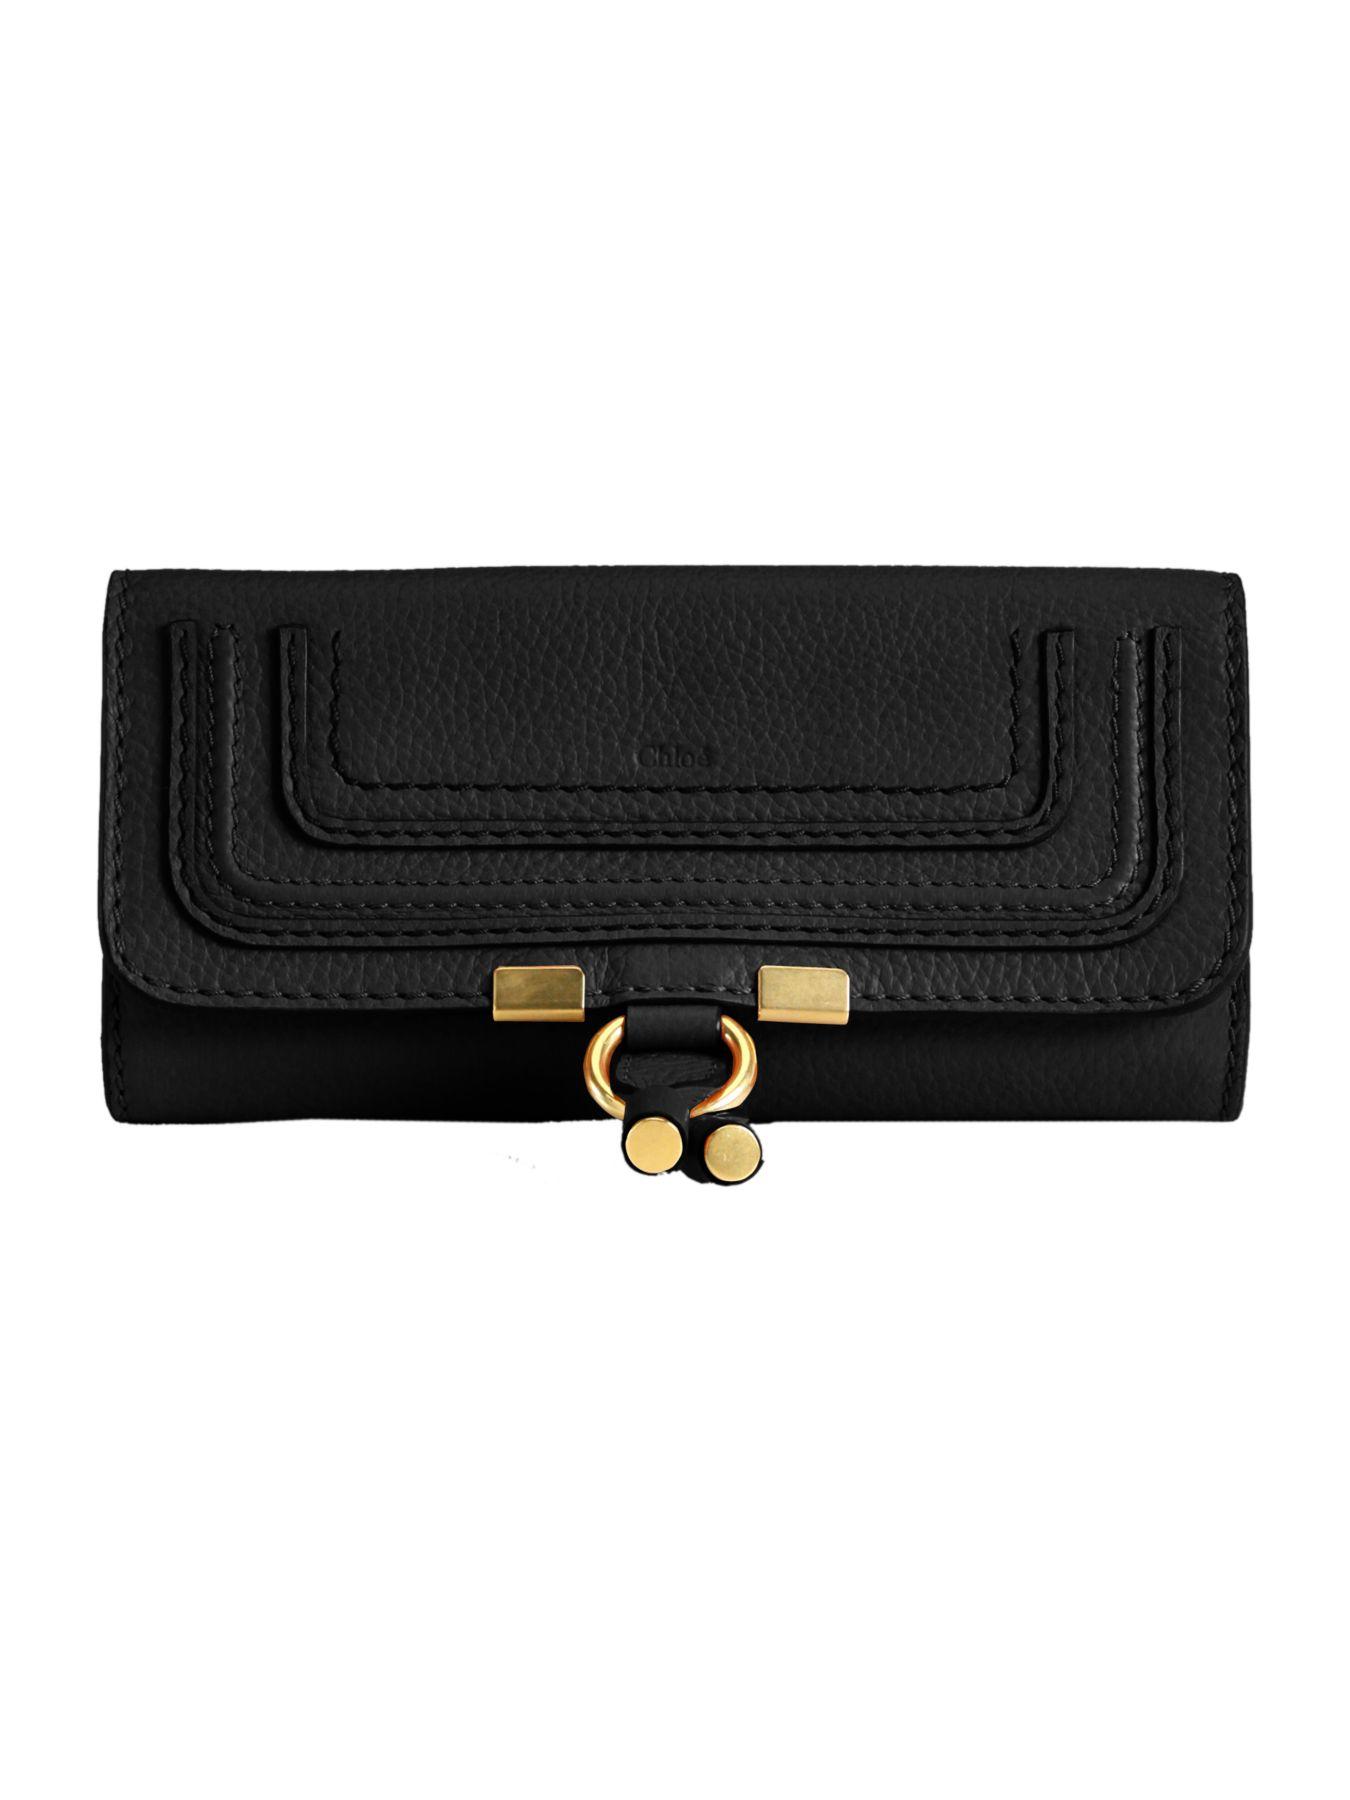 Chloé Chloé Marcie Leather Flap Wallet in Black - Save 29% - Lyst